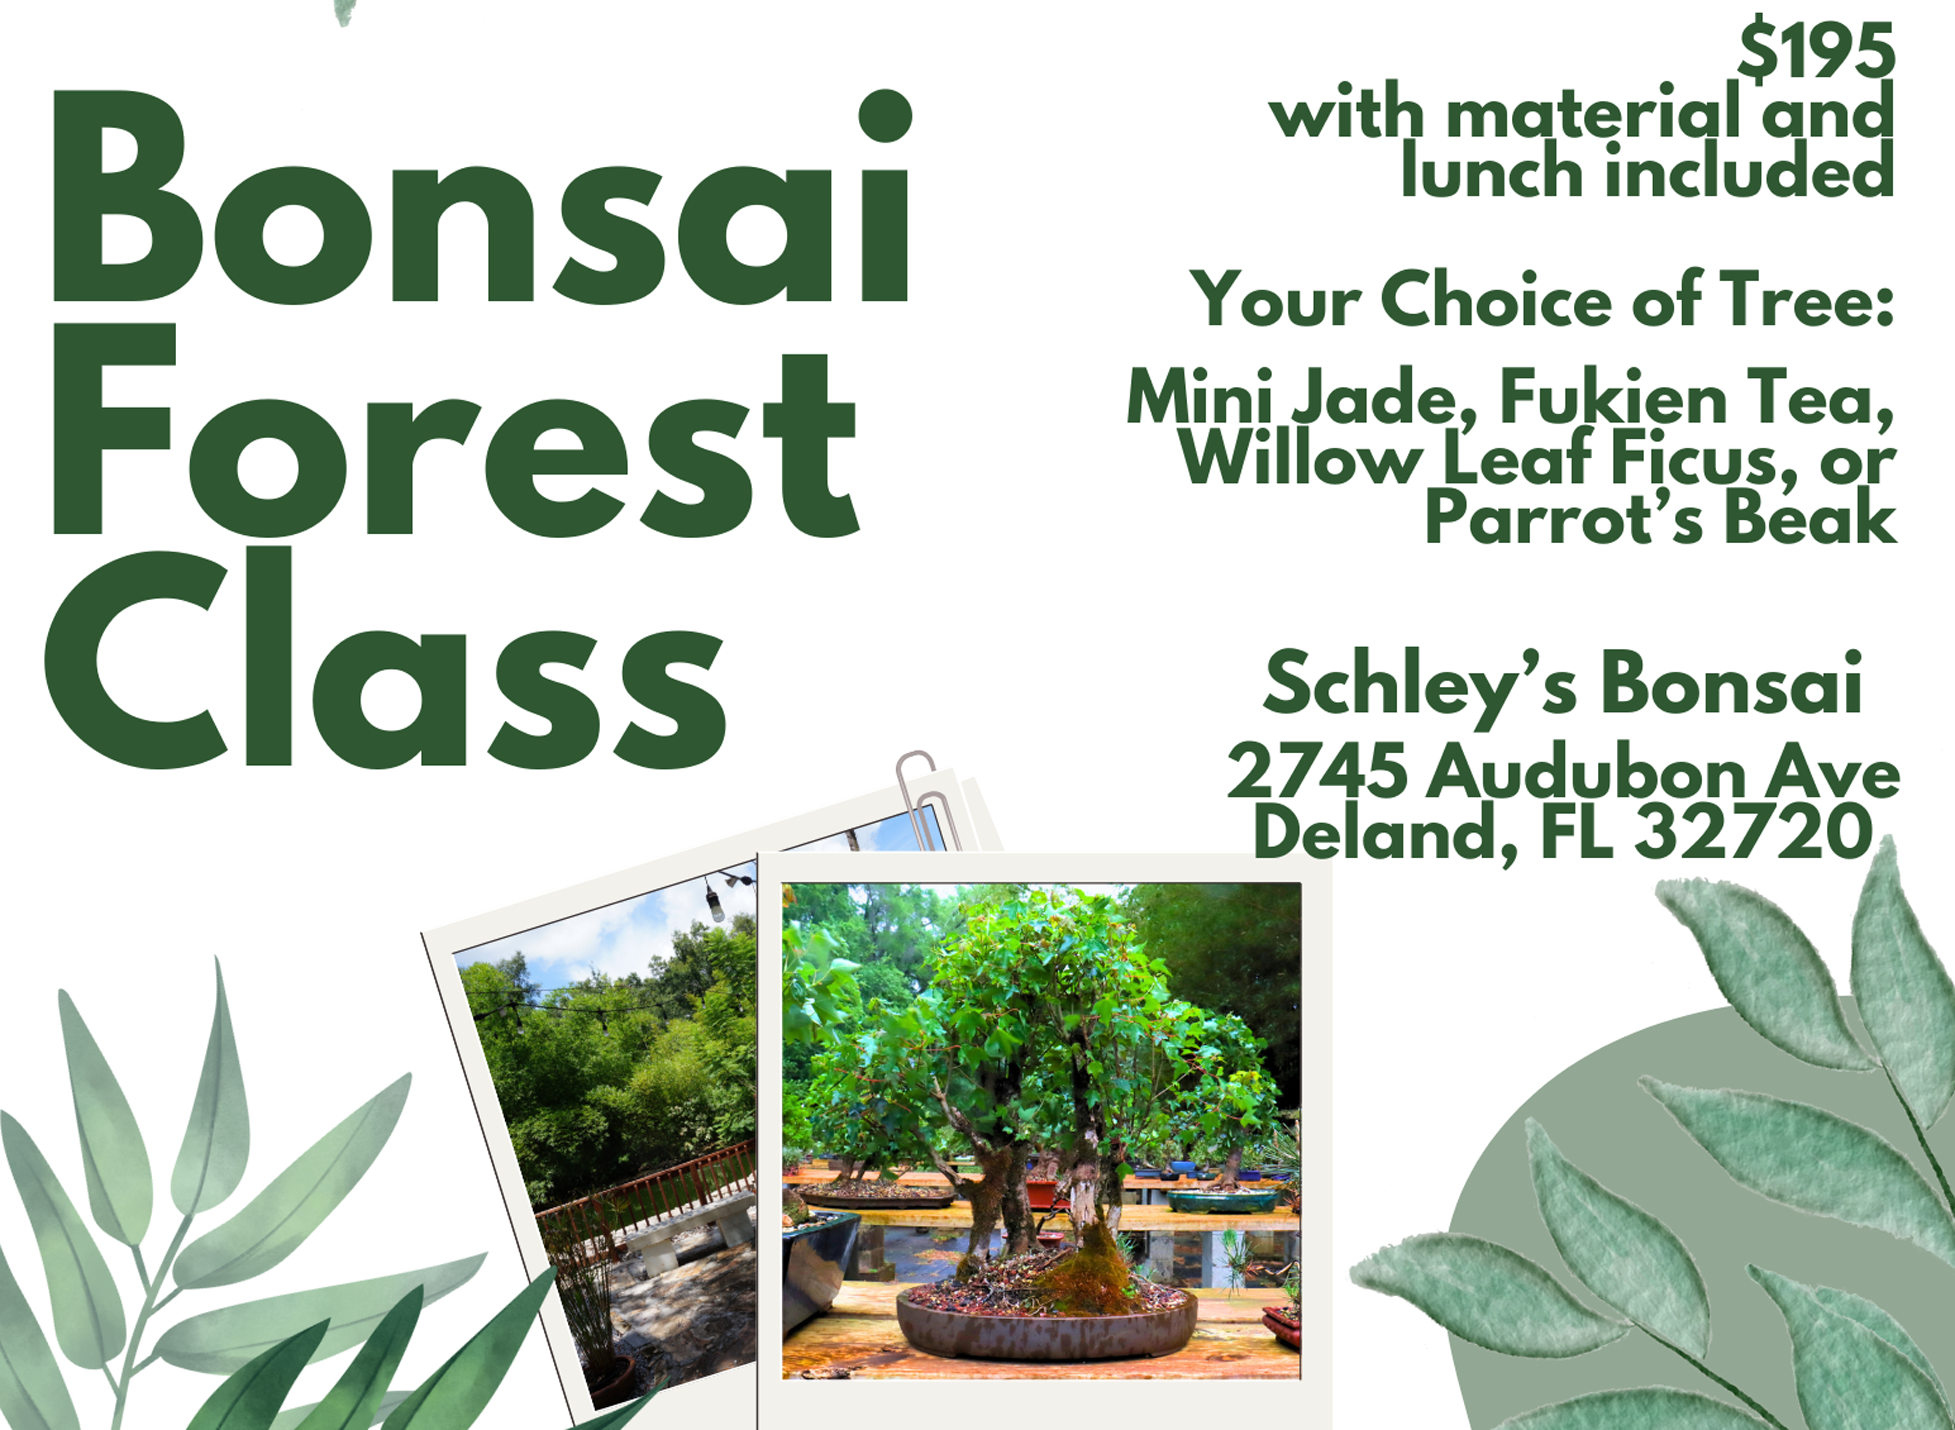 Bonsai Forest Class - Saturday, August 10th or 24th @ 9AM